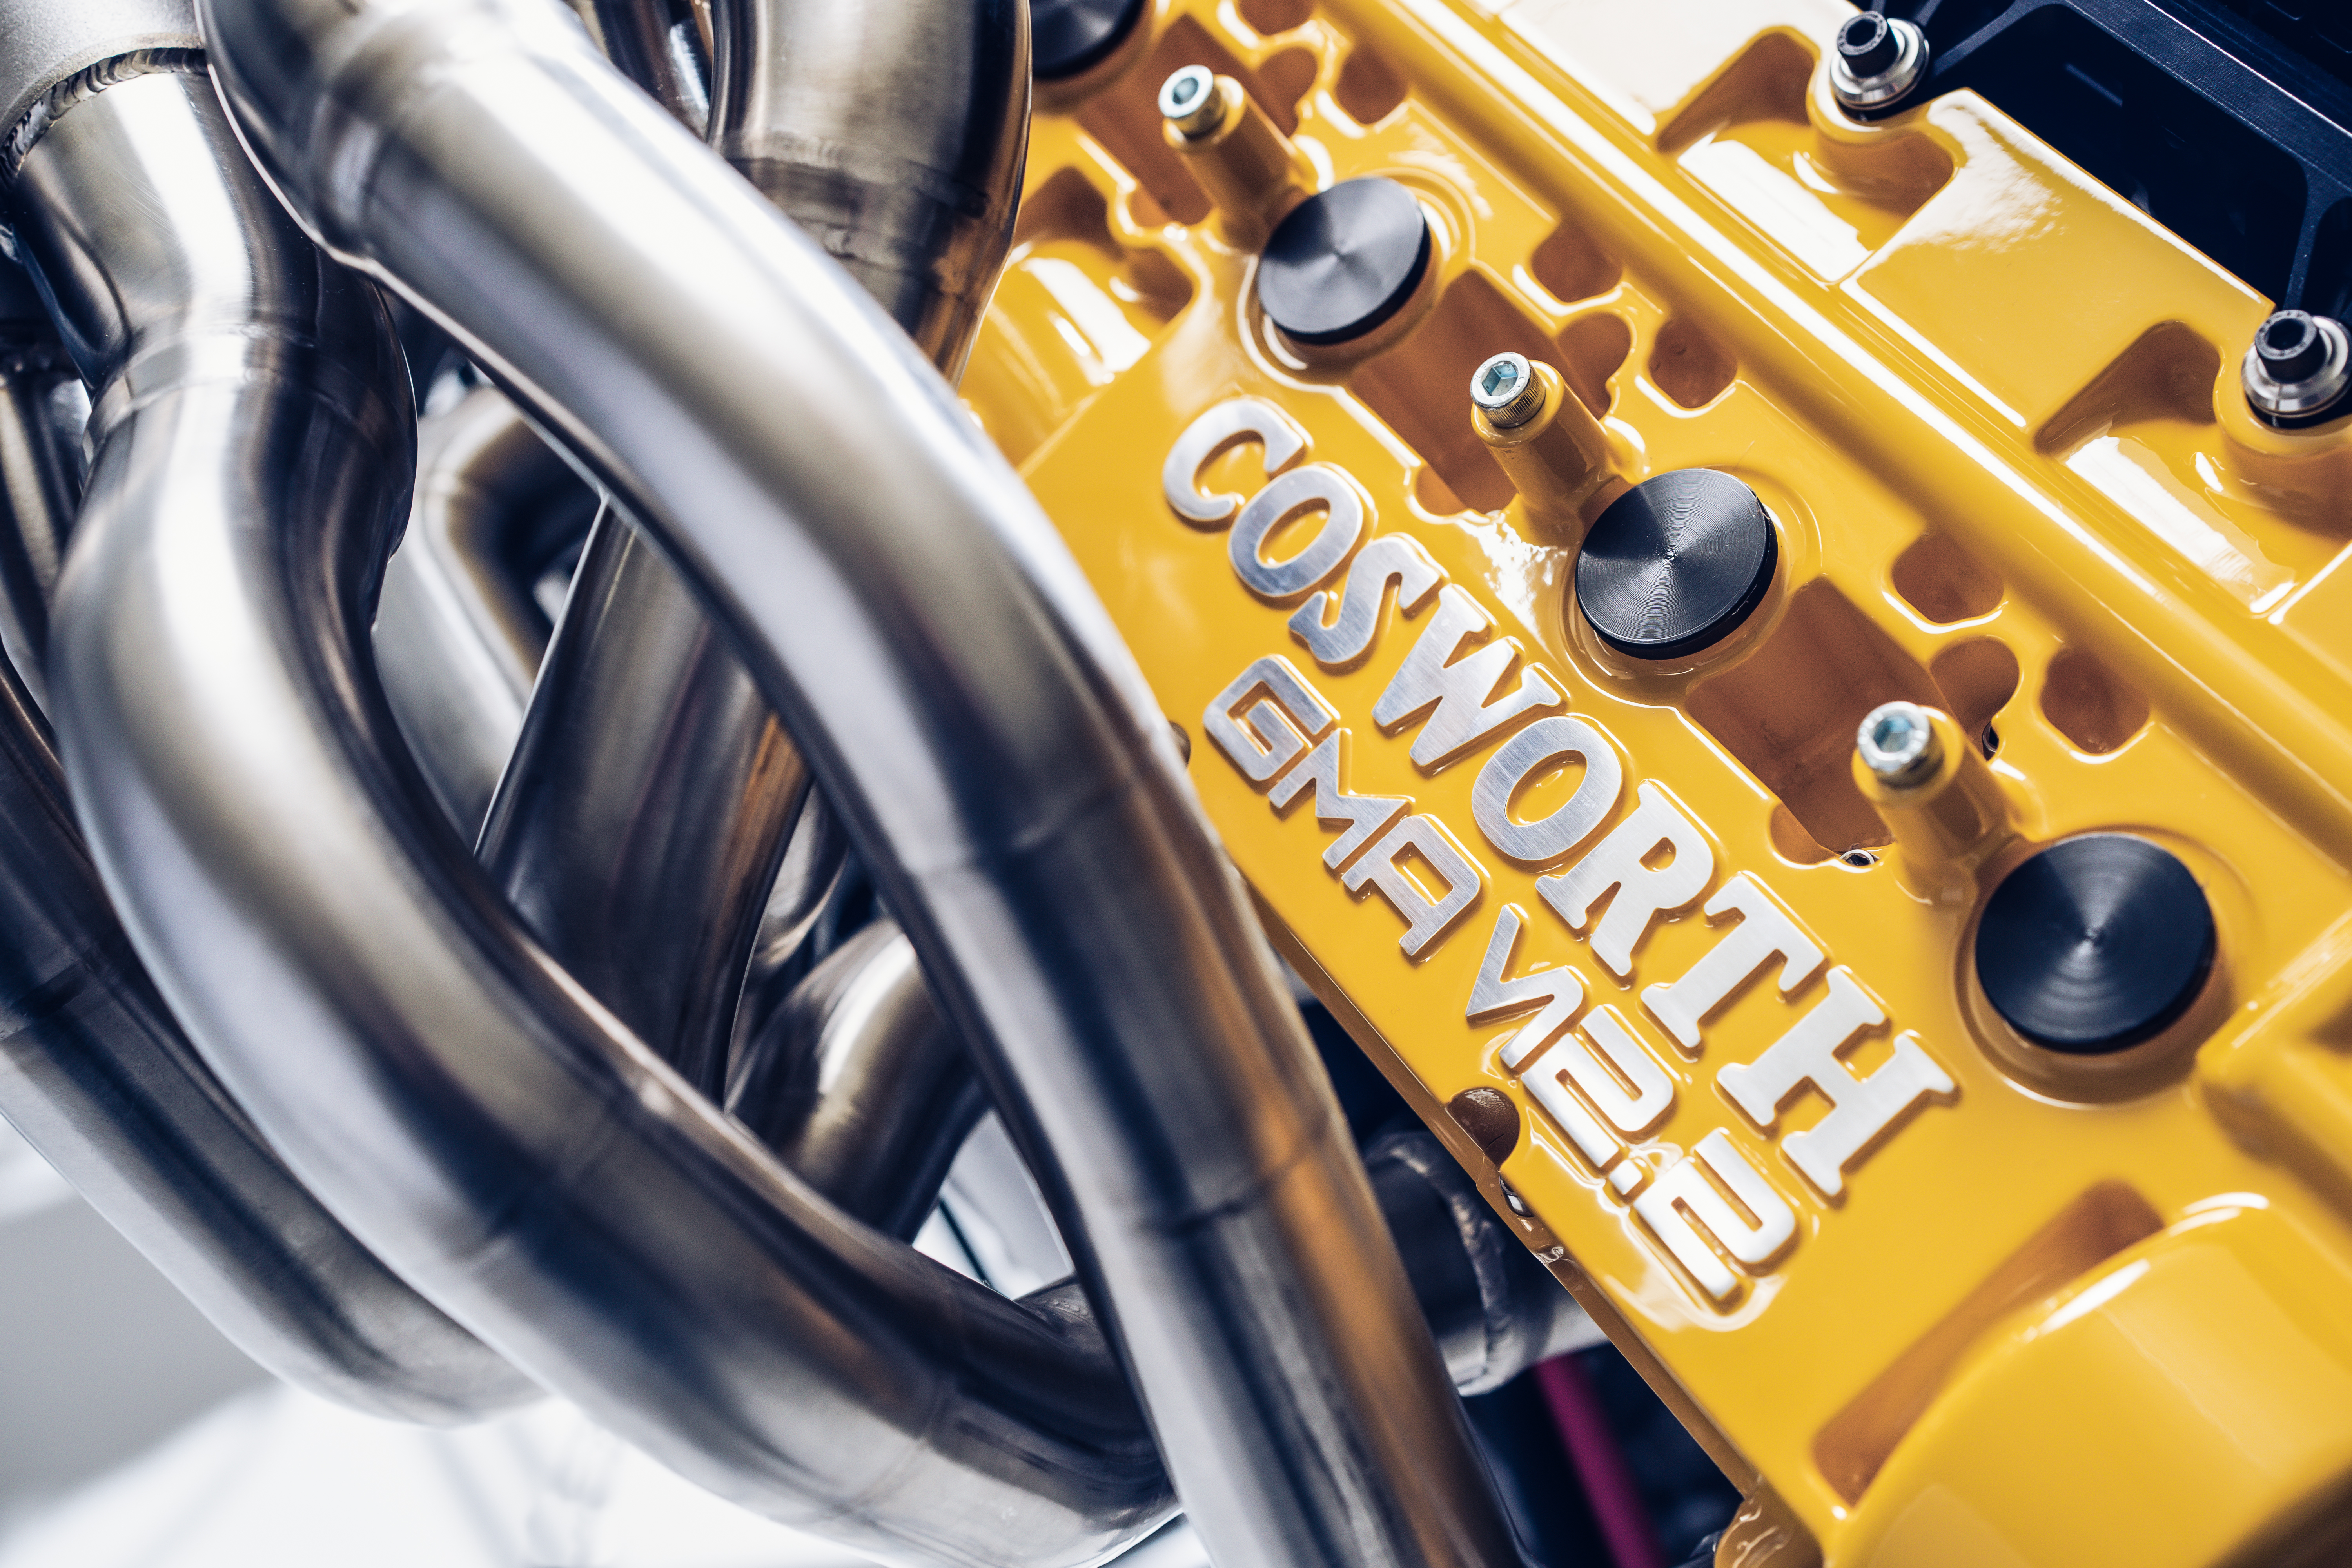 Cosworth V12